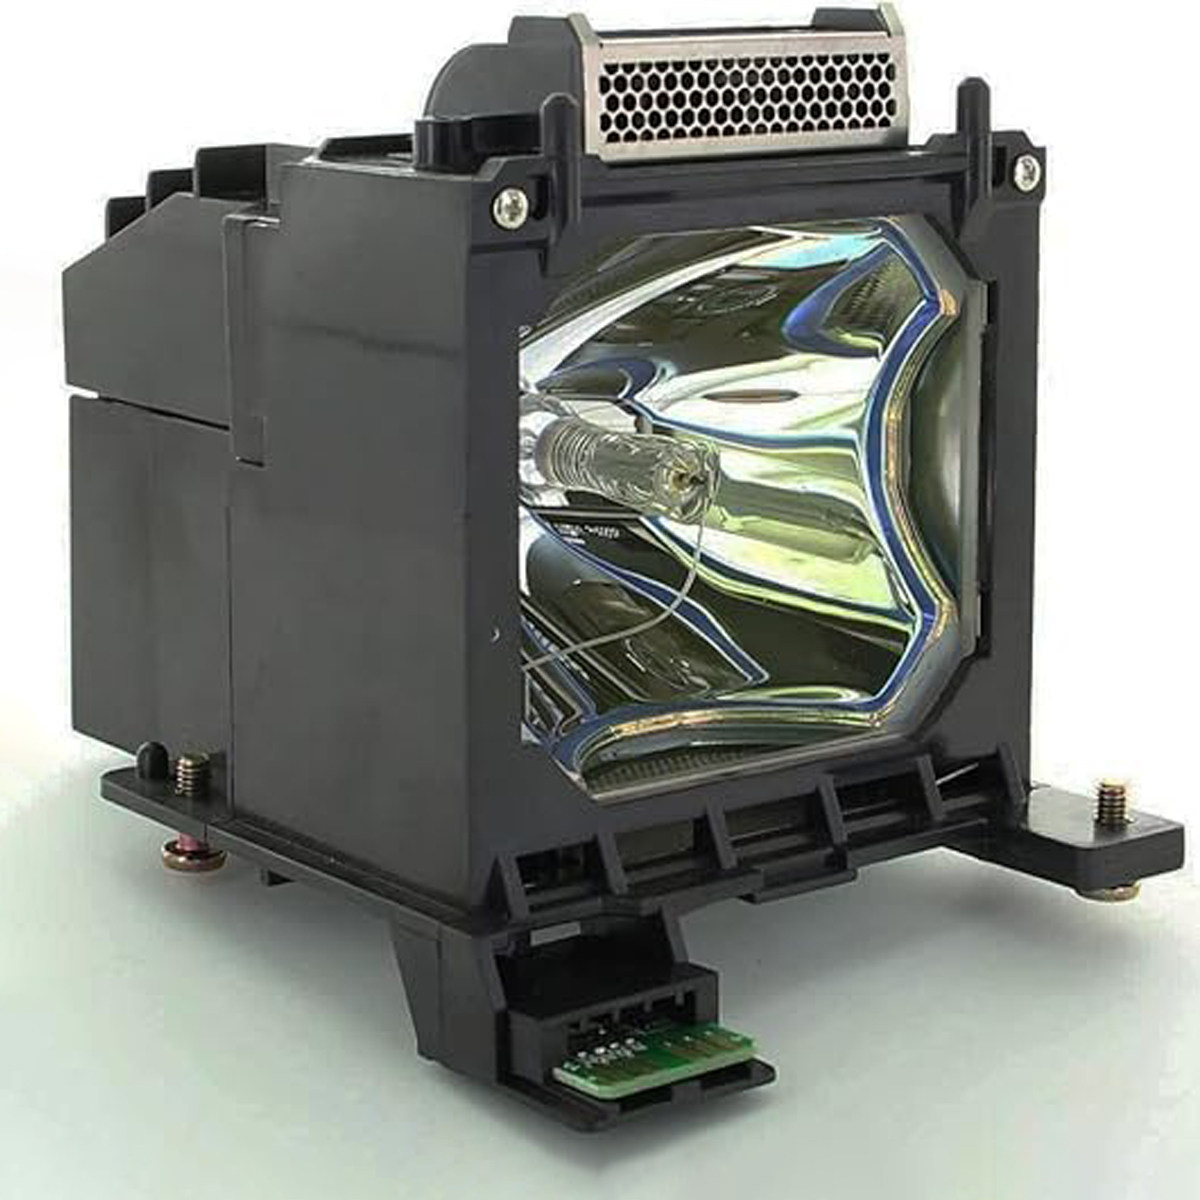 Replacement Projector lamp MT70LP/50025482 For NEC MT1075 MT1070